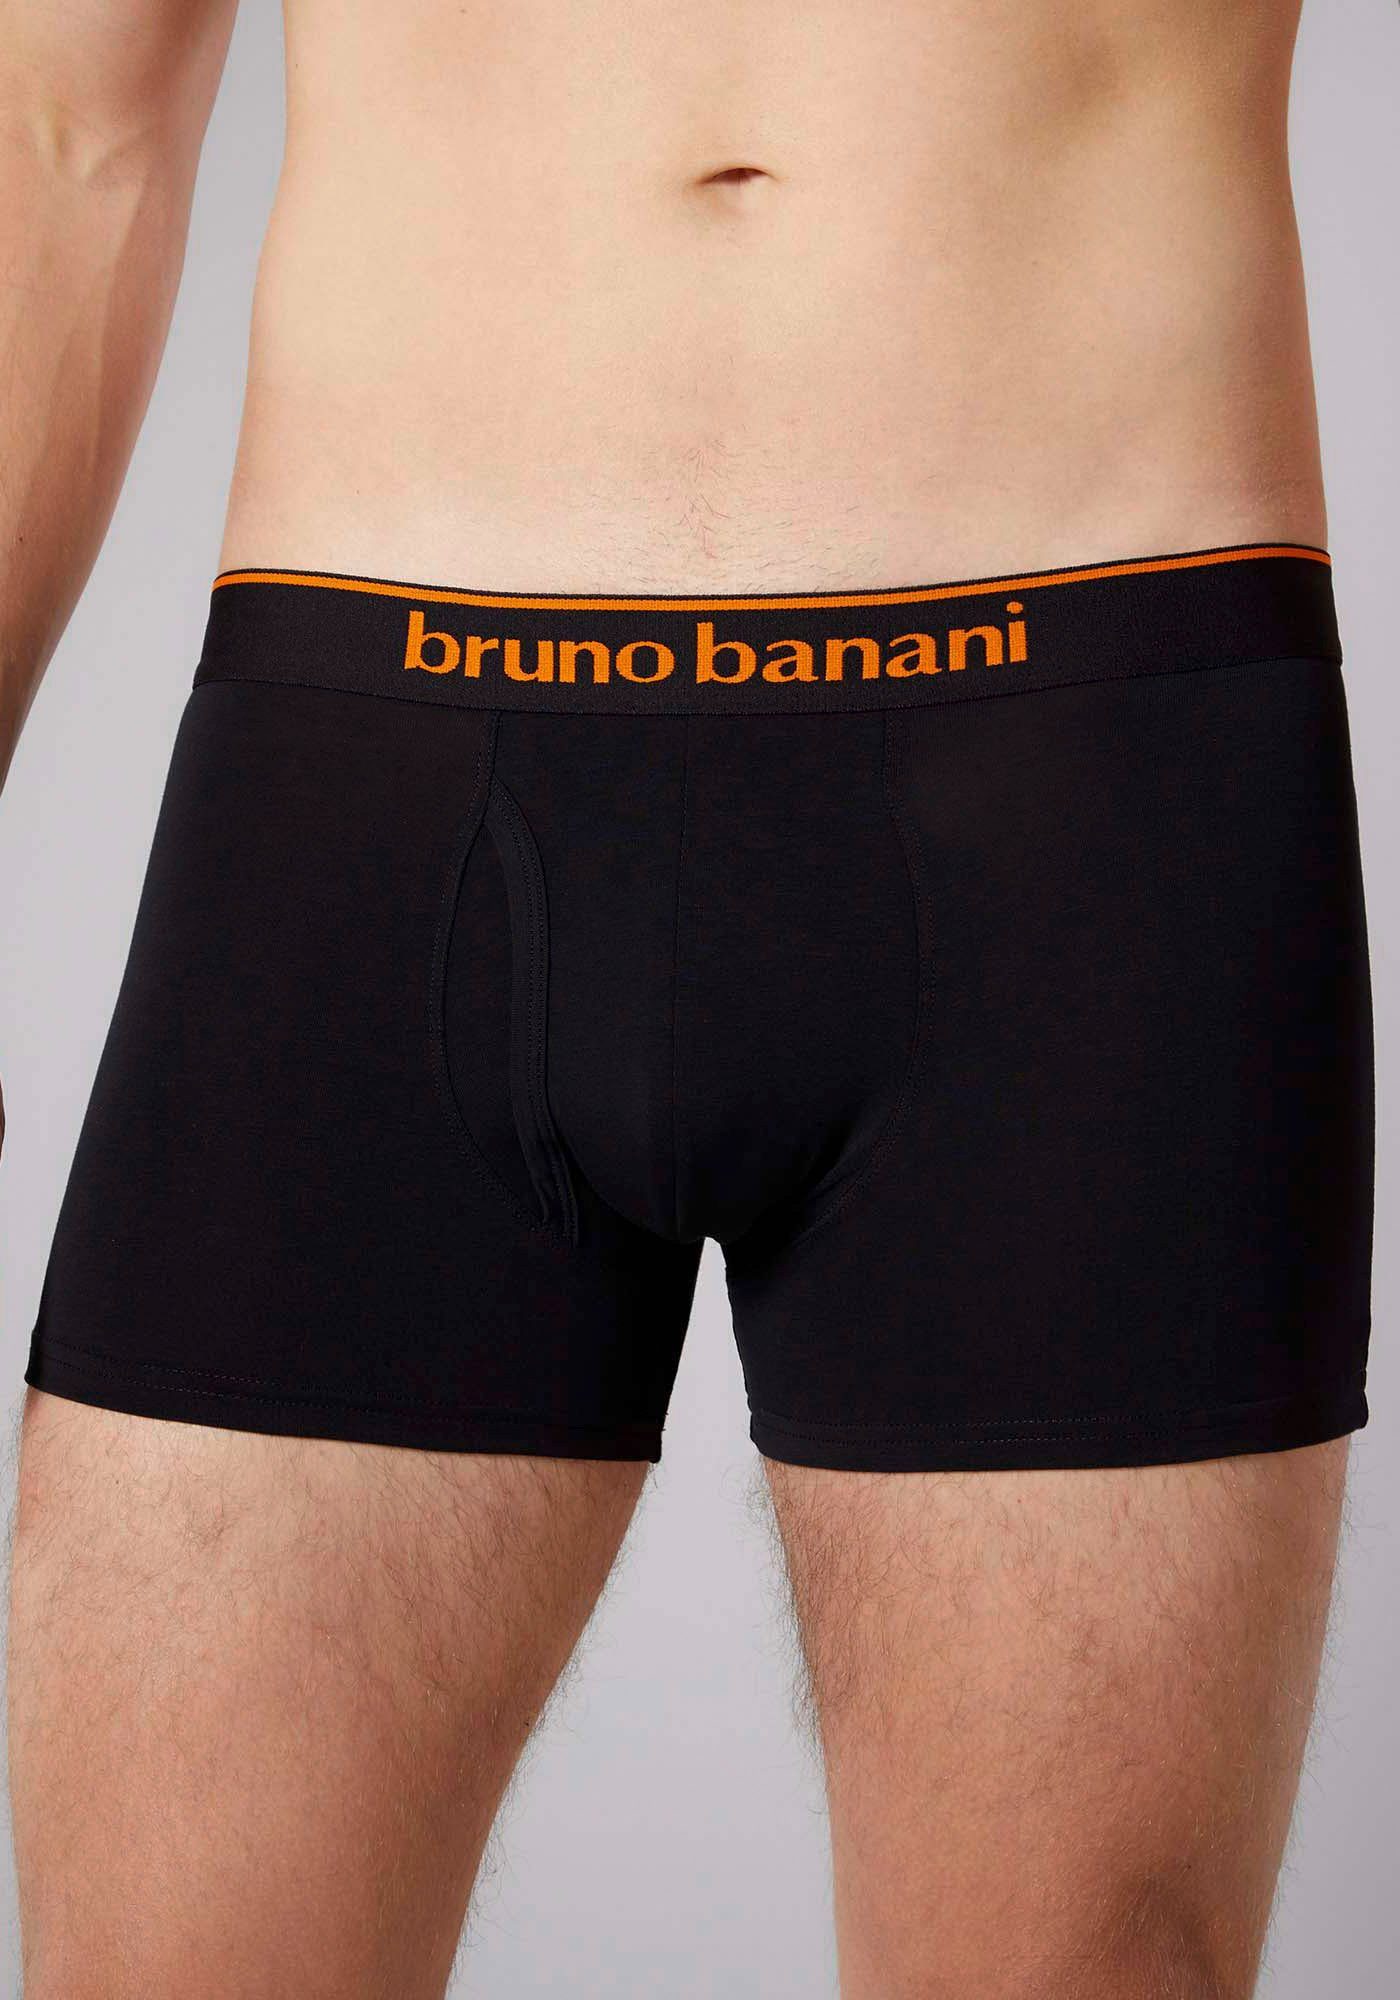 Bruno Banani Boxershorts Short Kontrastfarbene Access schwarz Details 2Pack 2-St) Quick (Packung